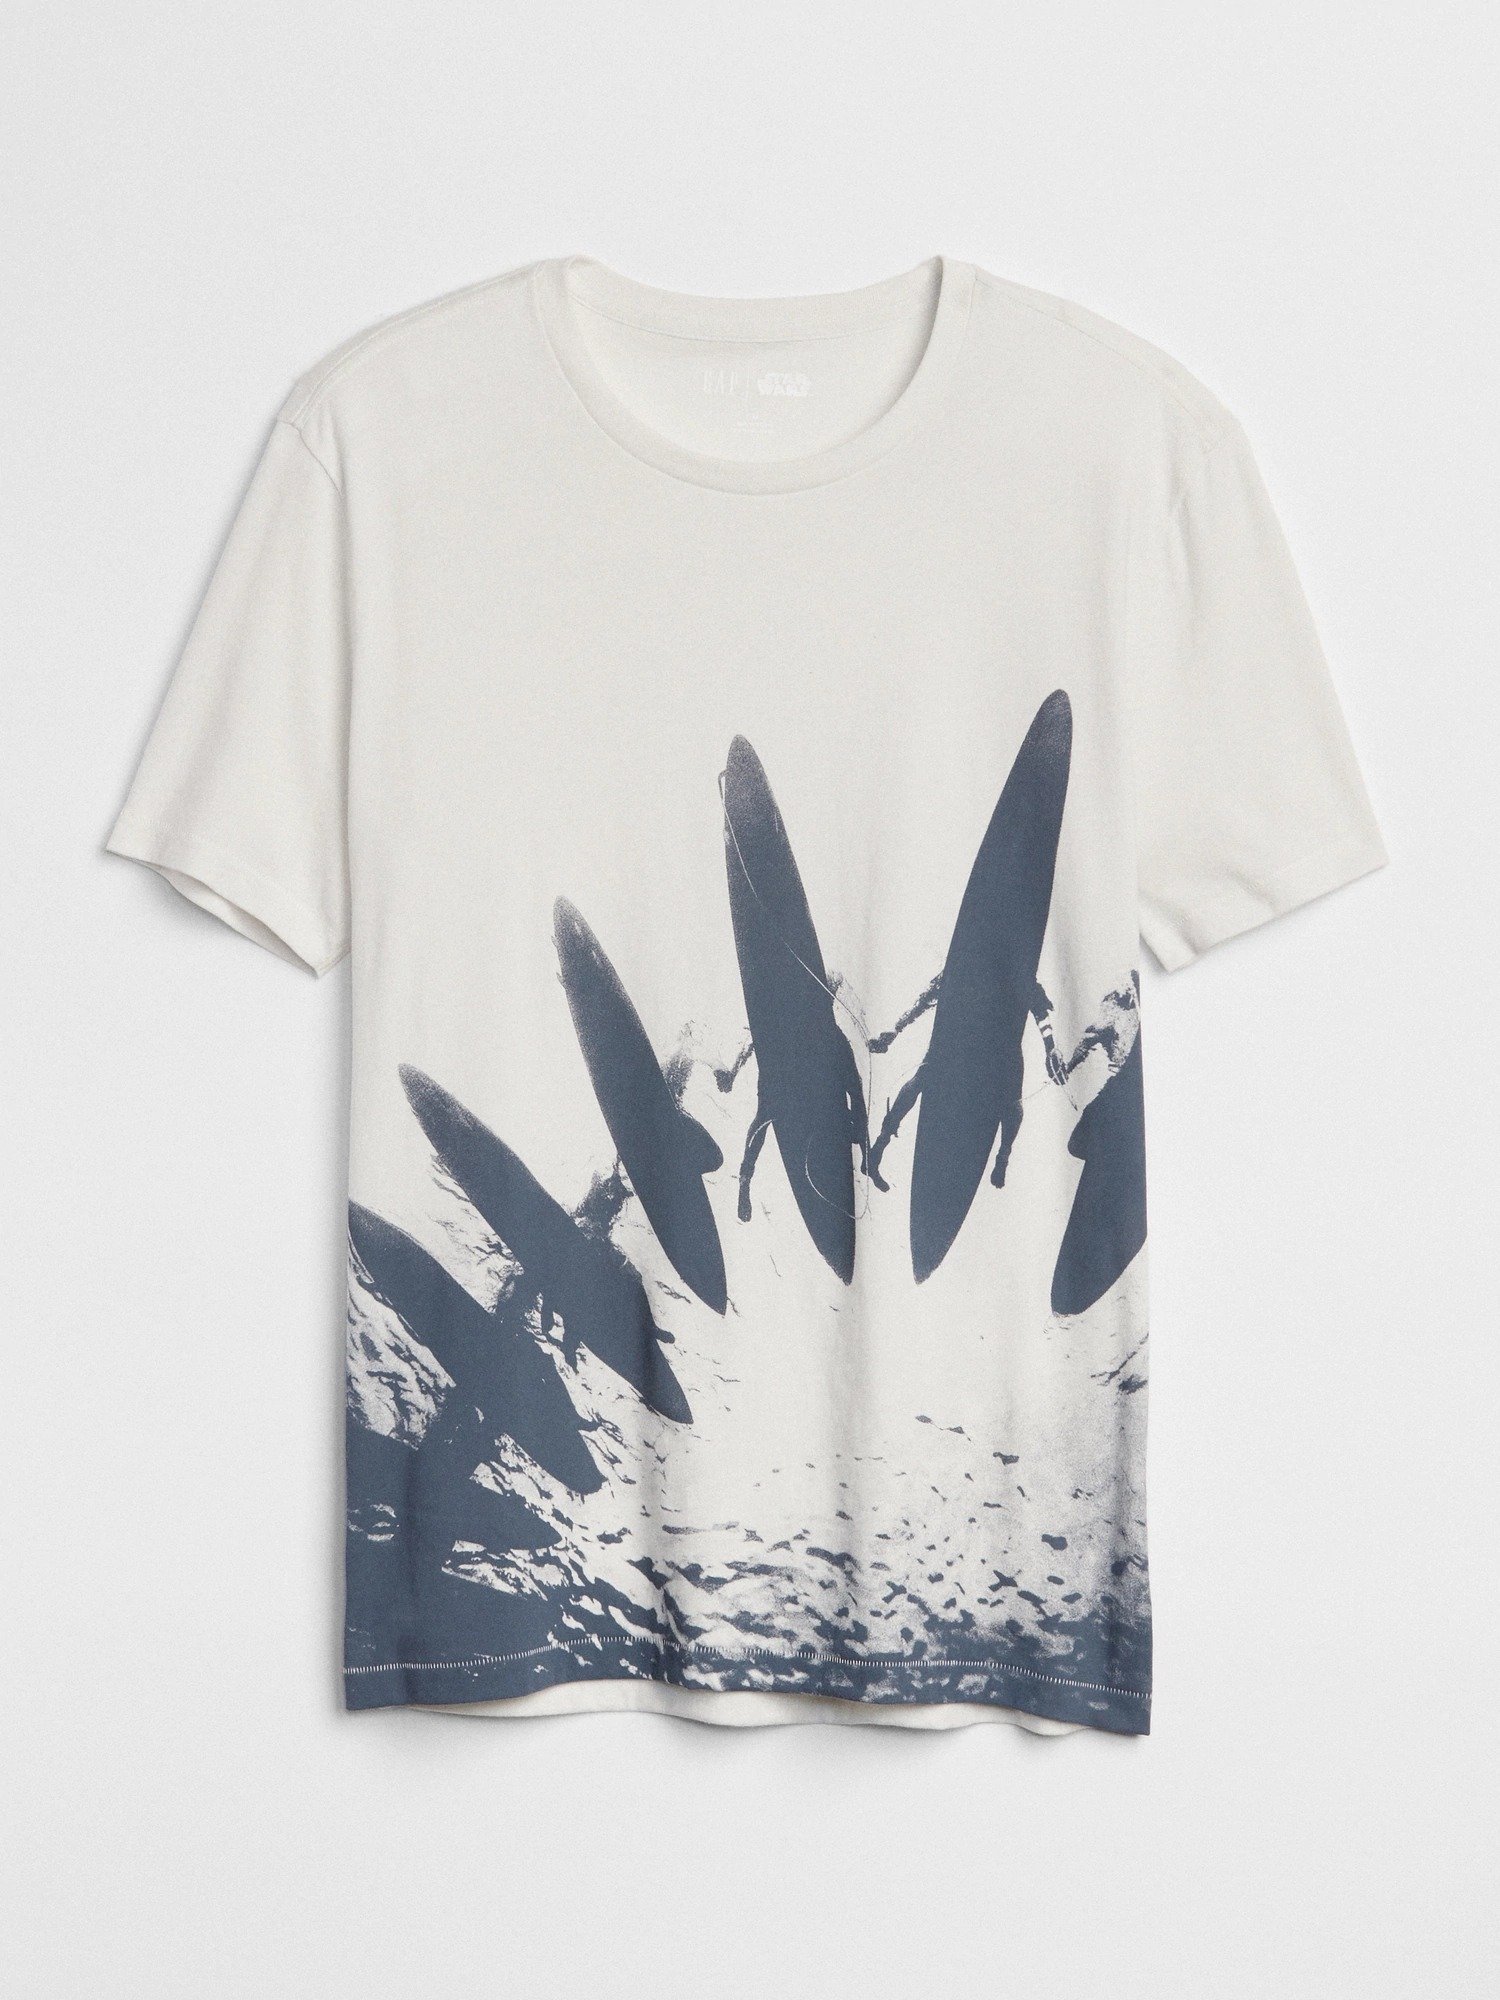 Gap | Brent Bielmann baskılı kısa kollu t-shirt product image